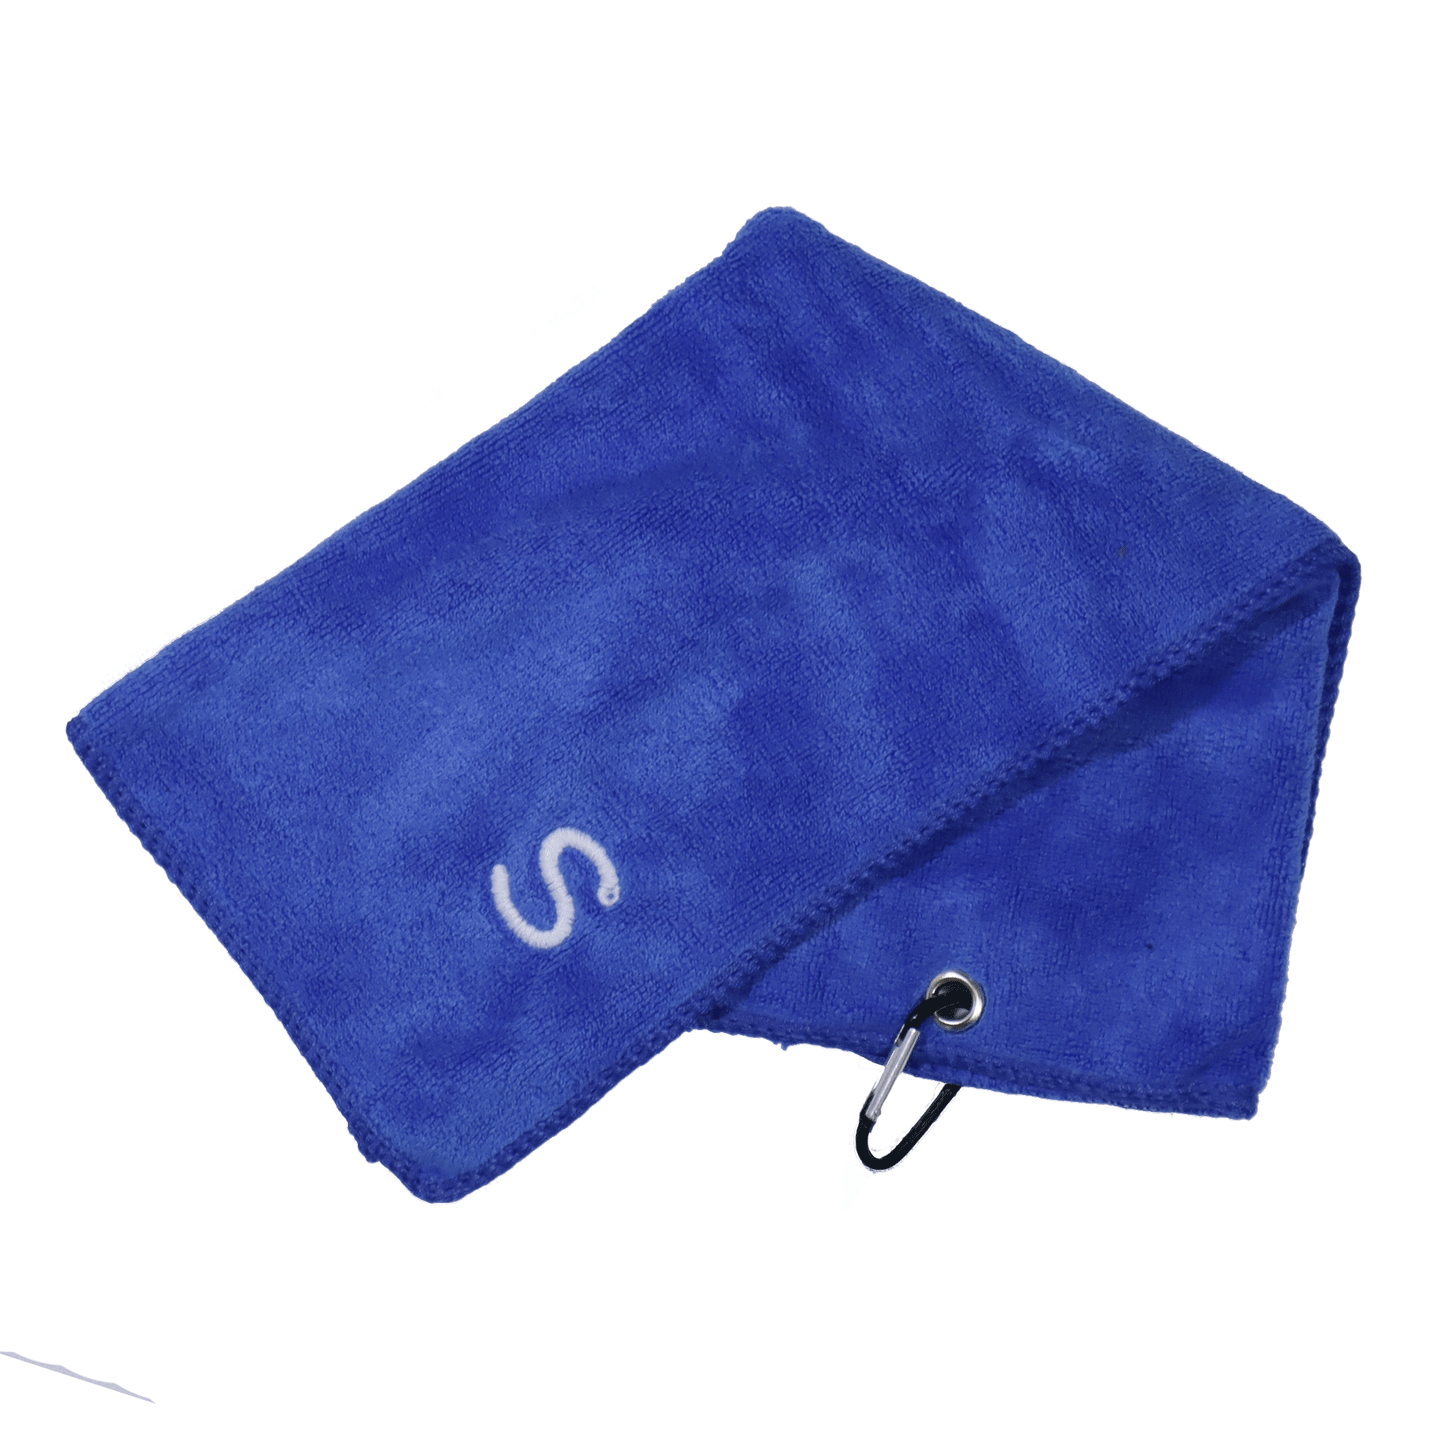 STRIKERS Sky blue players towel